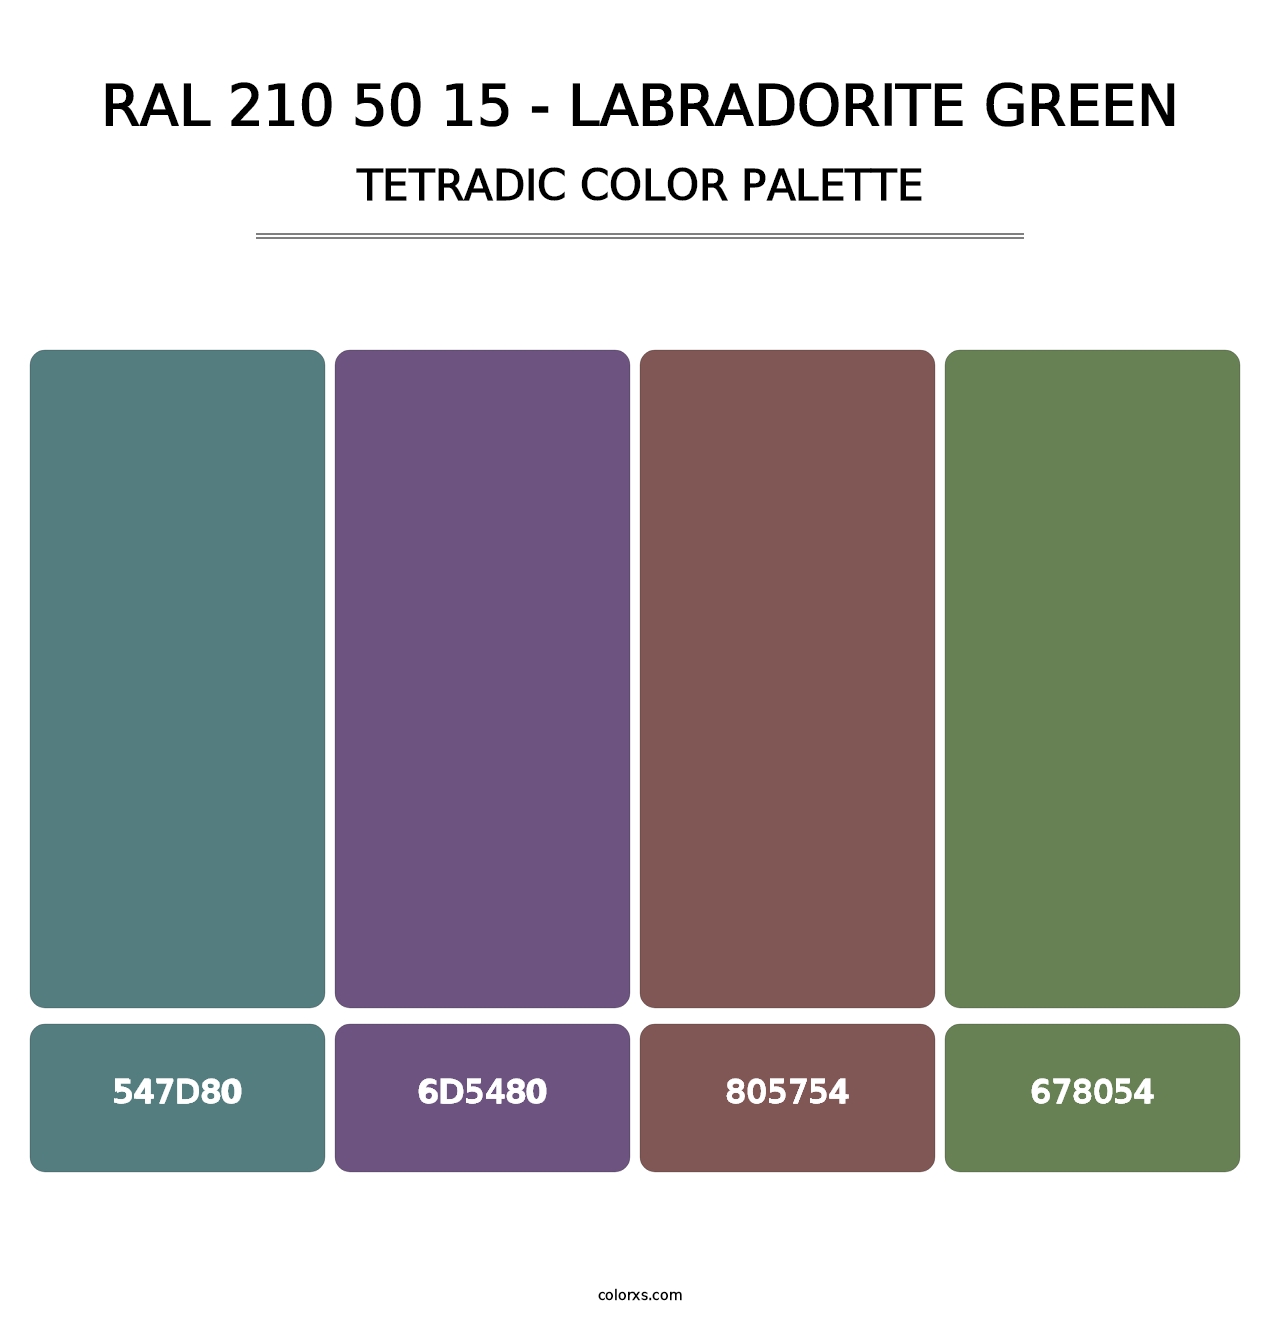 RAL 210 50 15 - Labradorite Green - Tetradic Color Palette